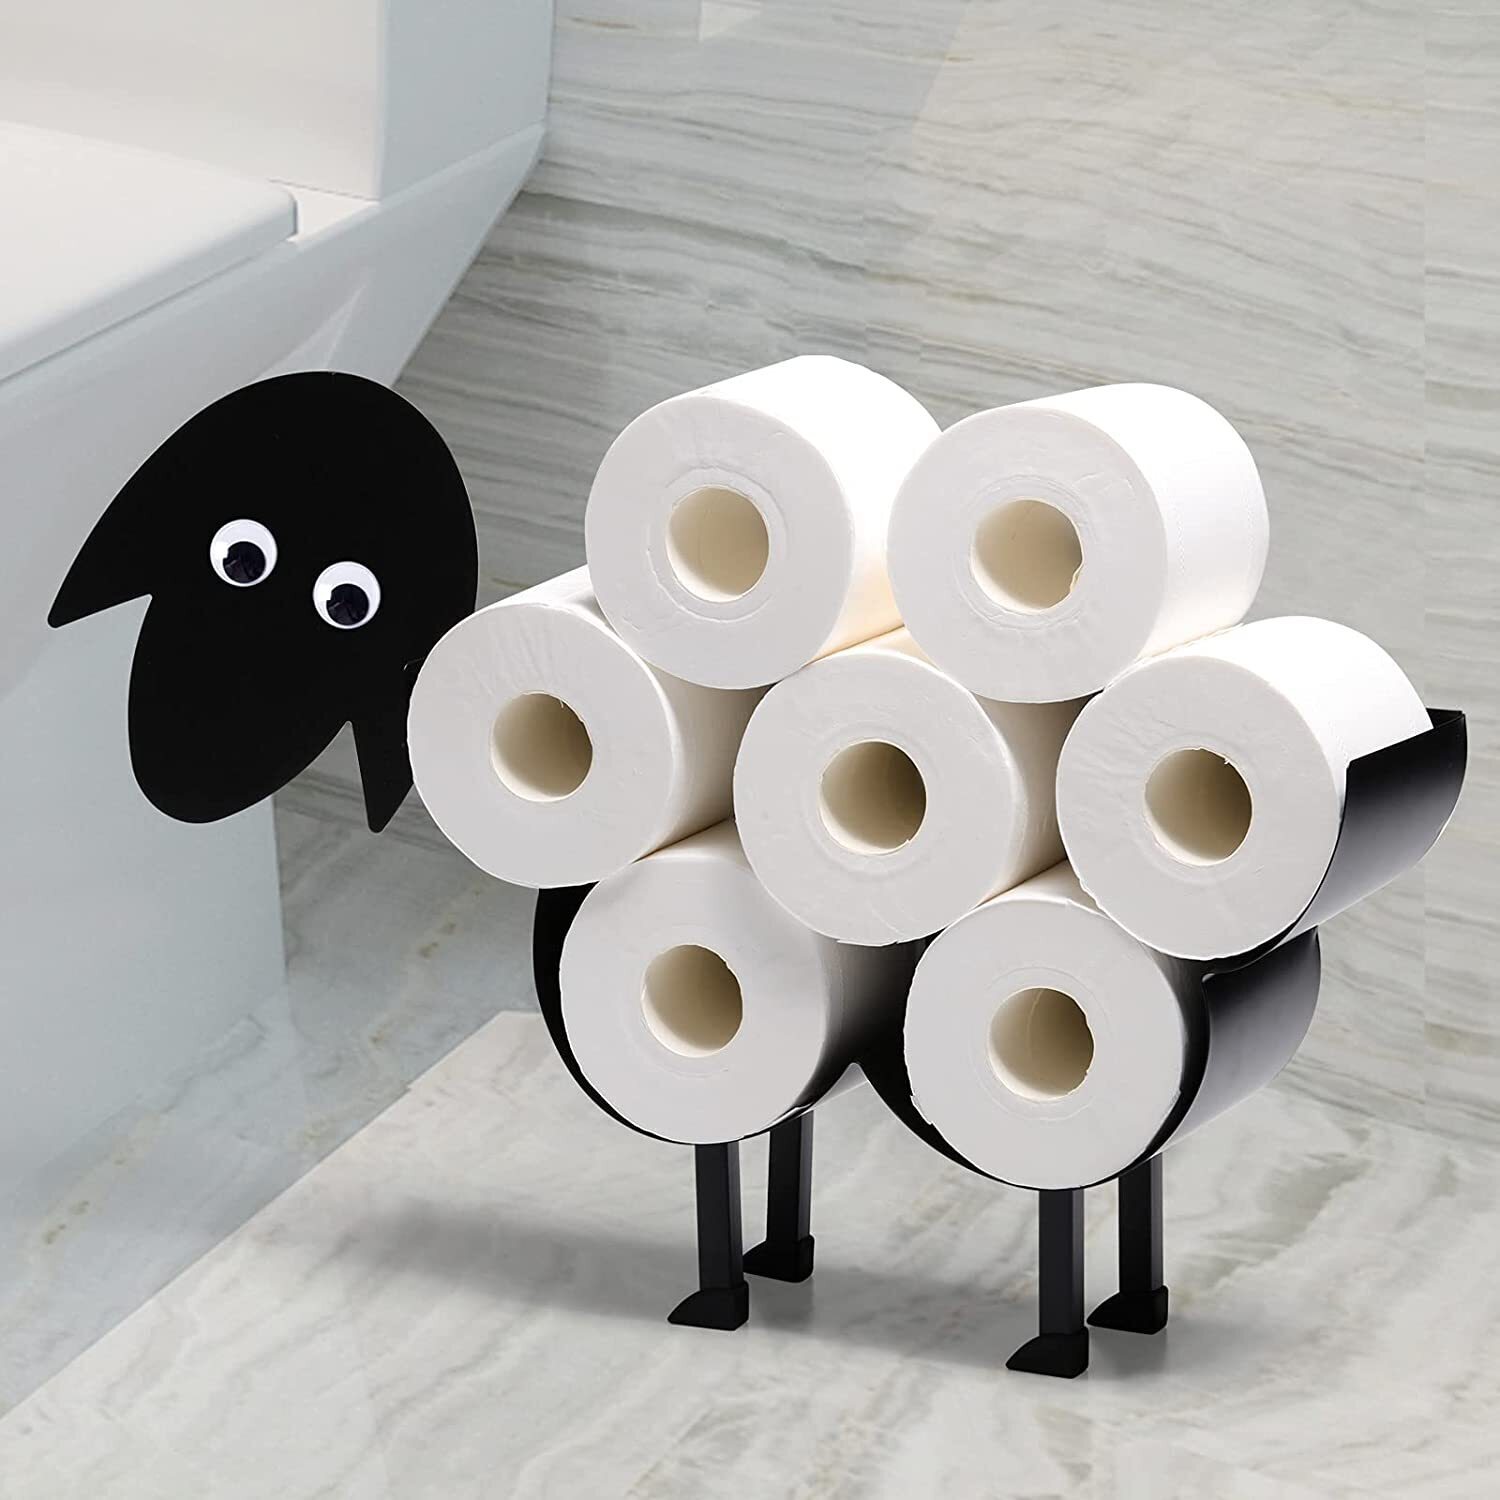 Unique Free Standing Toilet Paper Holder